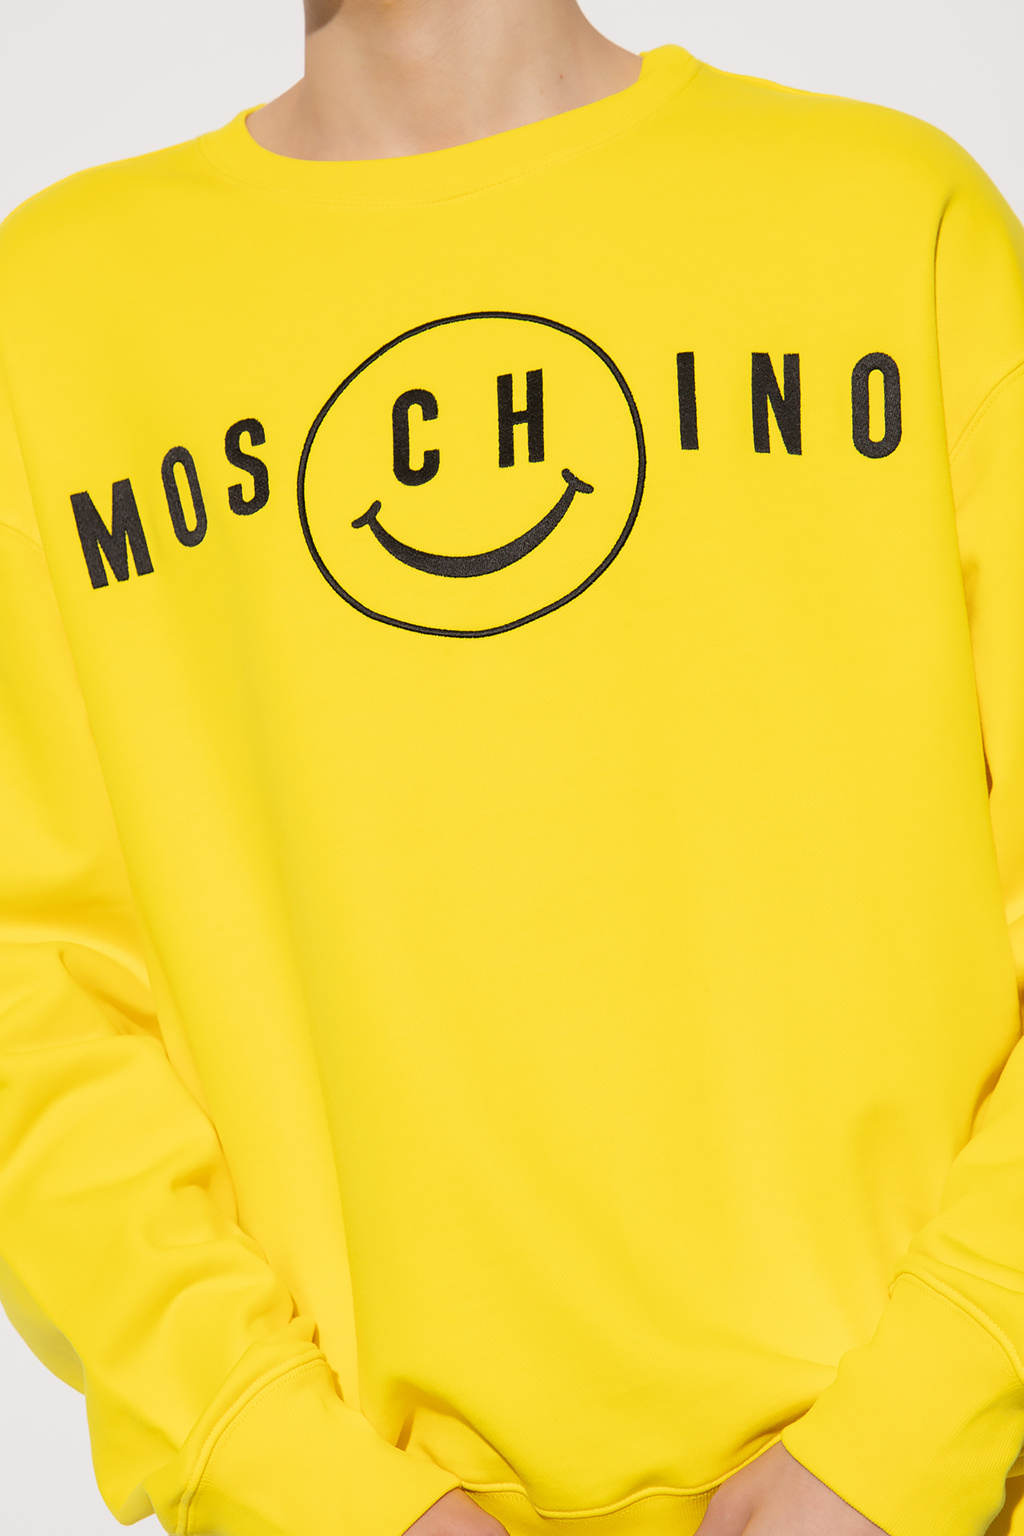 Moschino CC logos button setup suit jacket